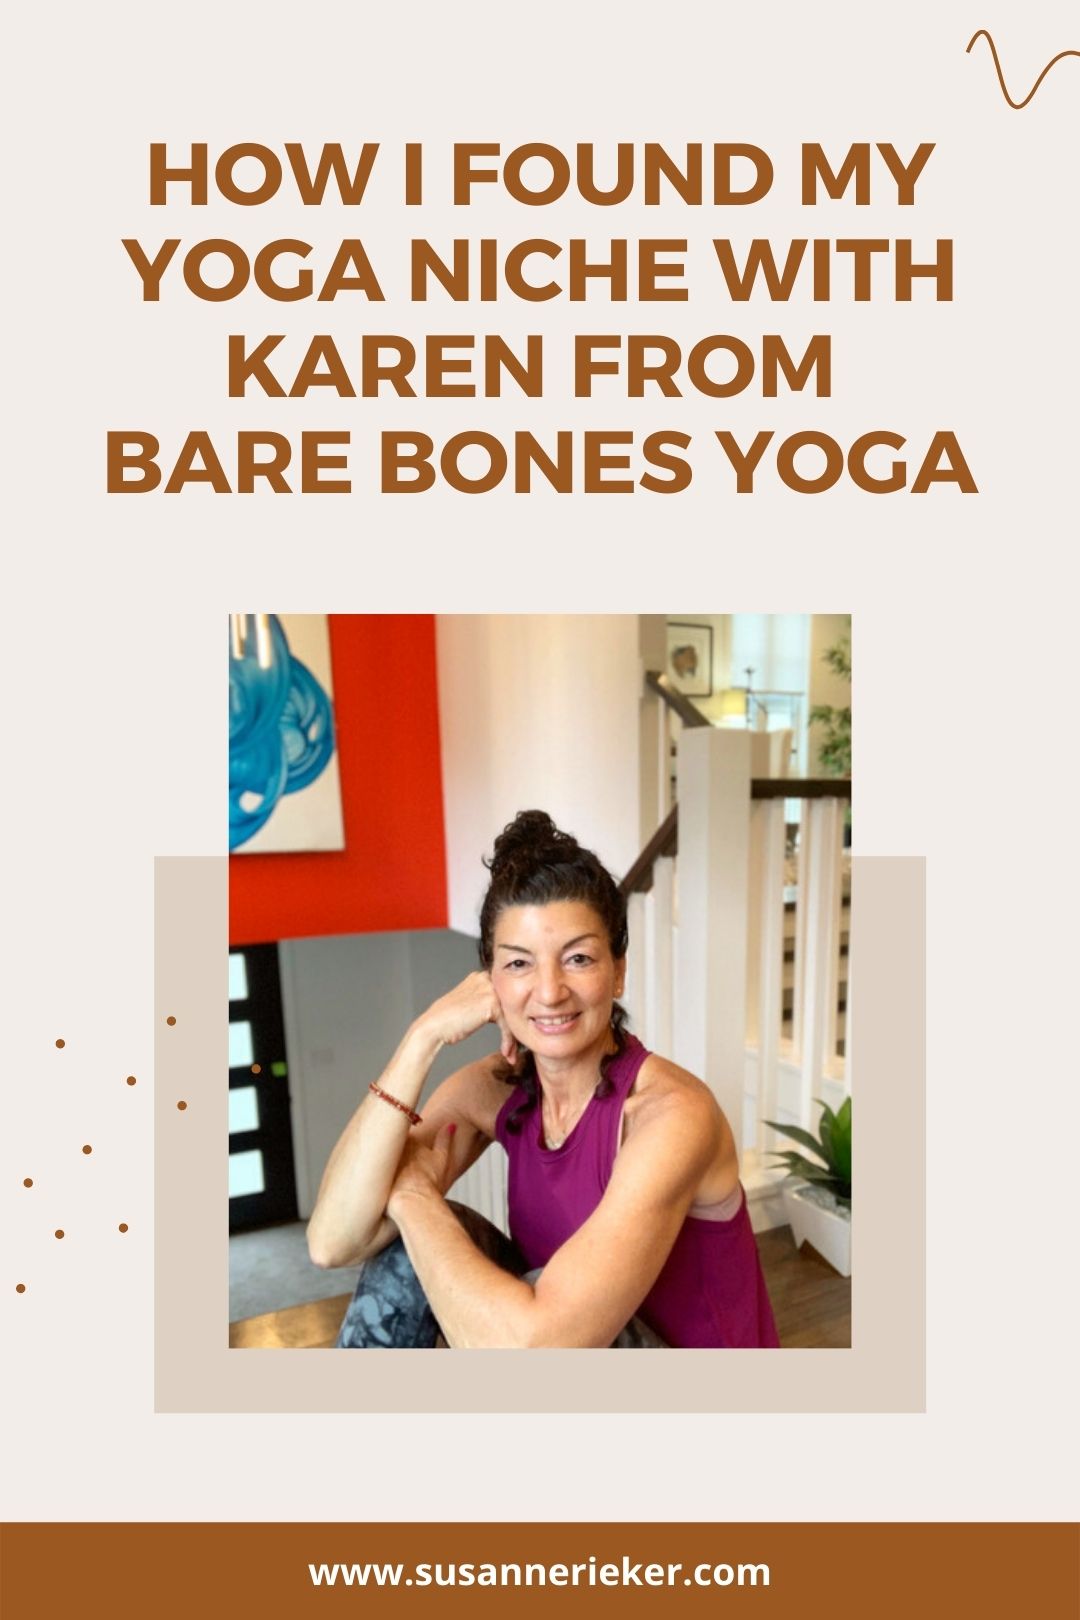 Karen Fabian from Bare Bones Yoga